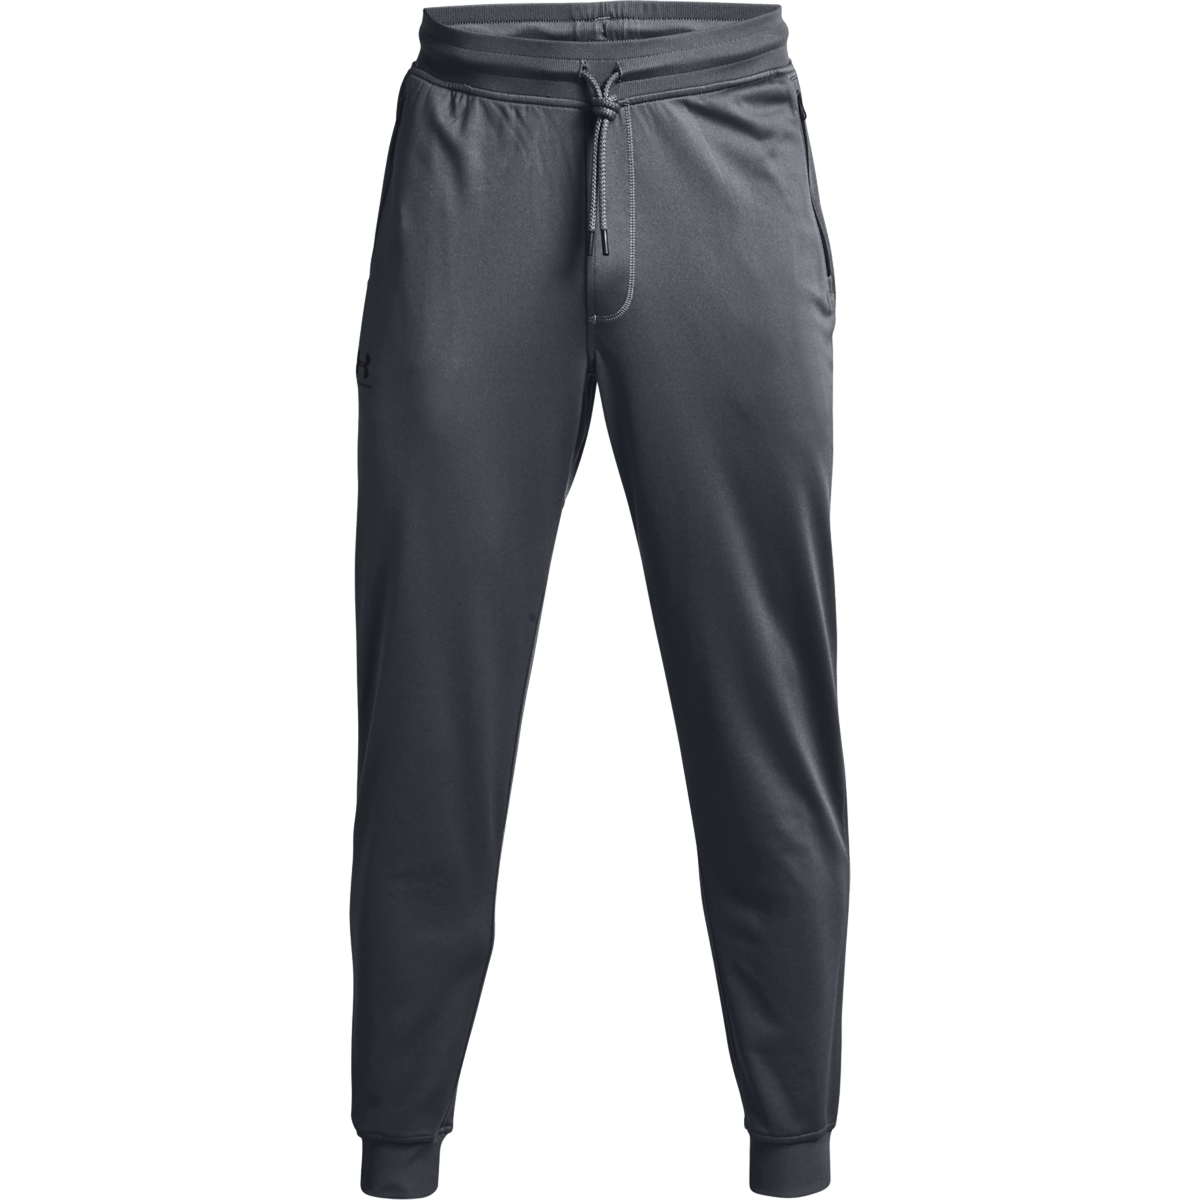 Men's Skinny Stripe Casual Elastic Close Bottom Track Pants Drawstring  Zipper Tapered Pant with Pockets Joggers Sweatpants (Gray,Large)